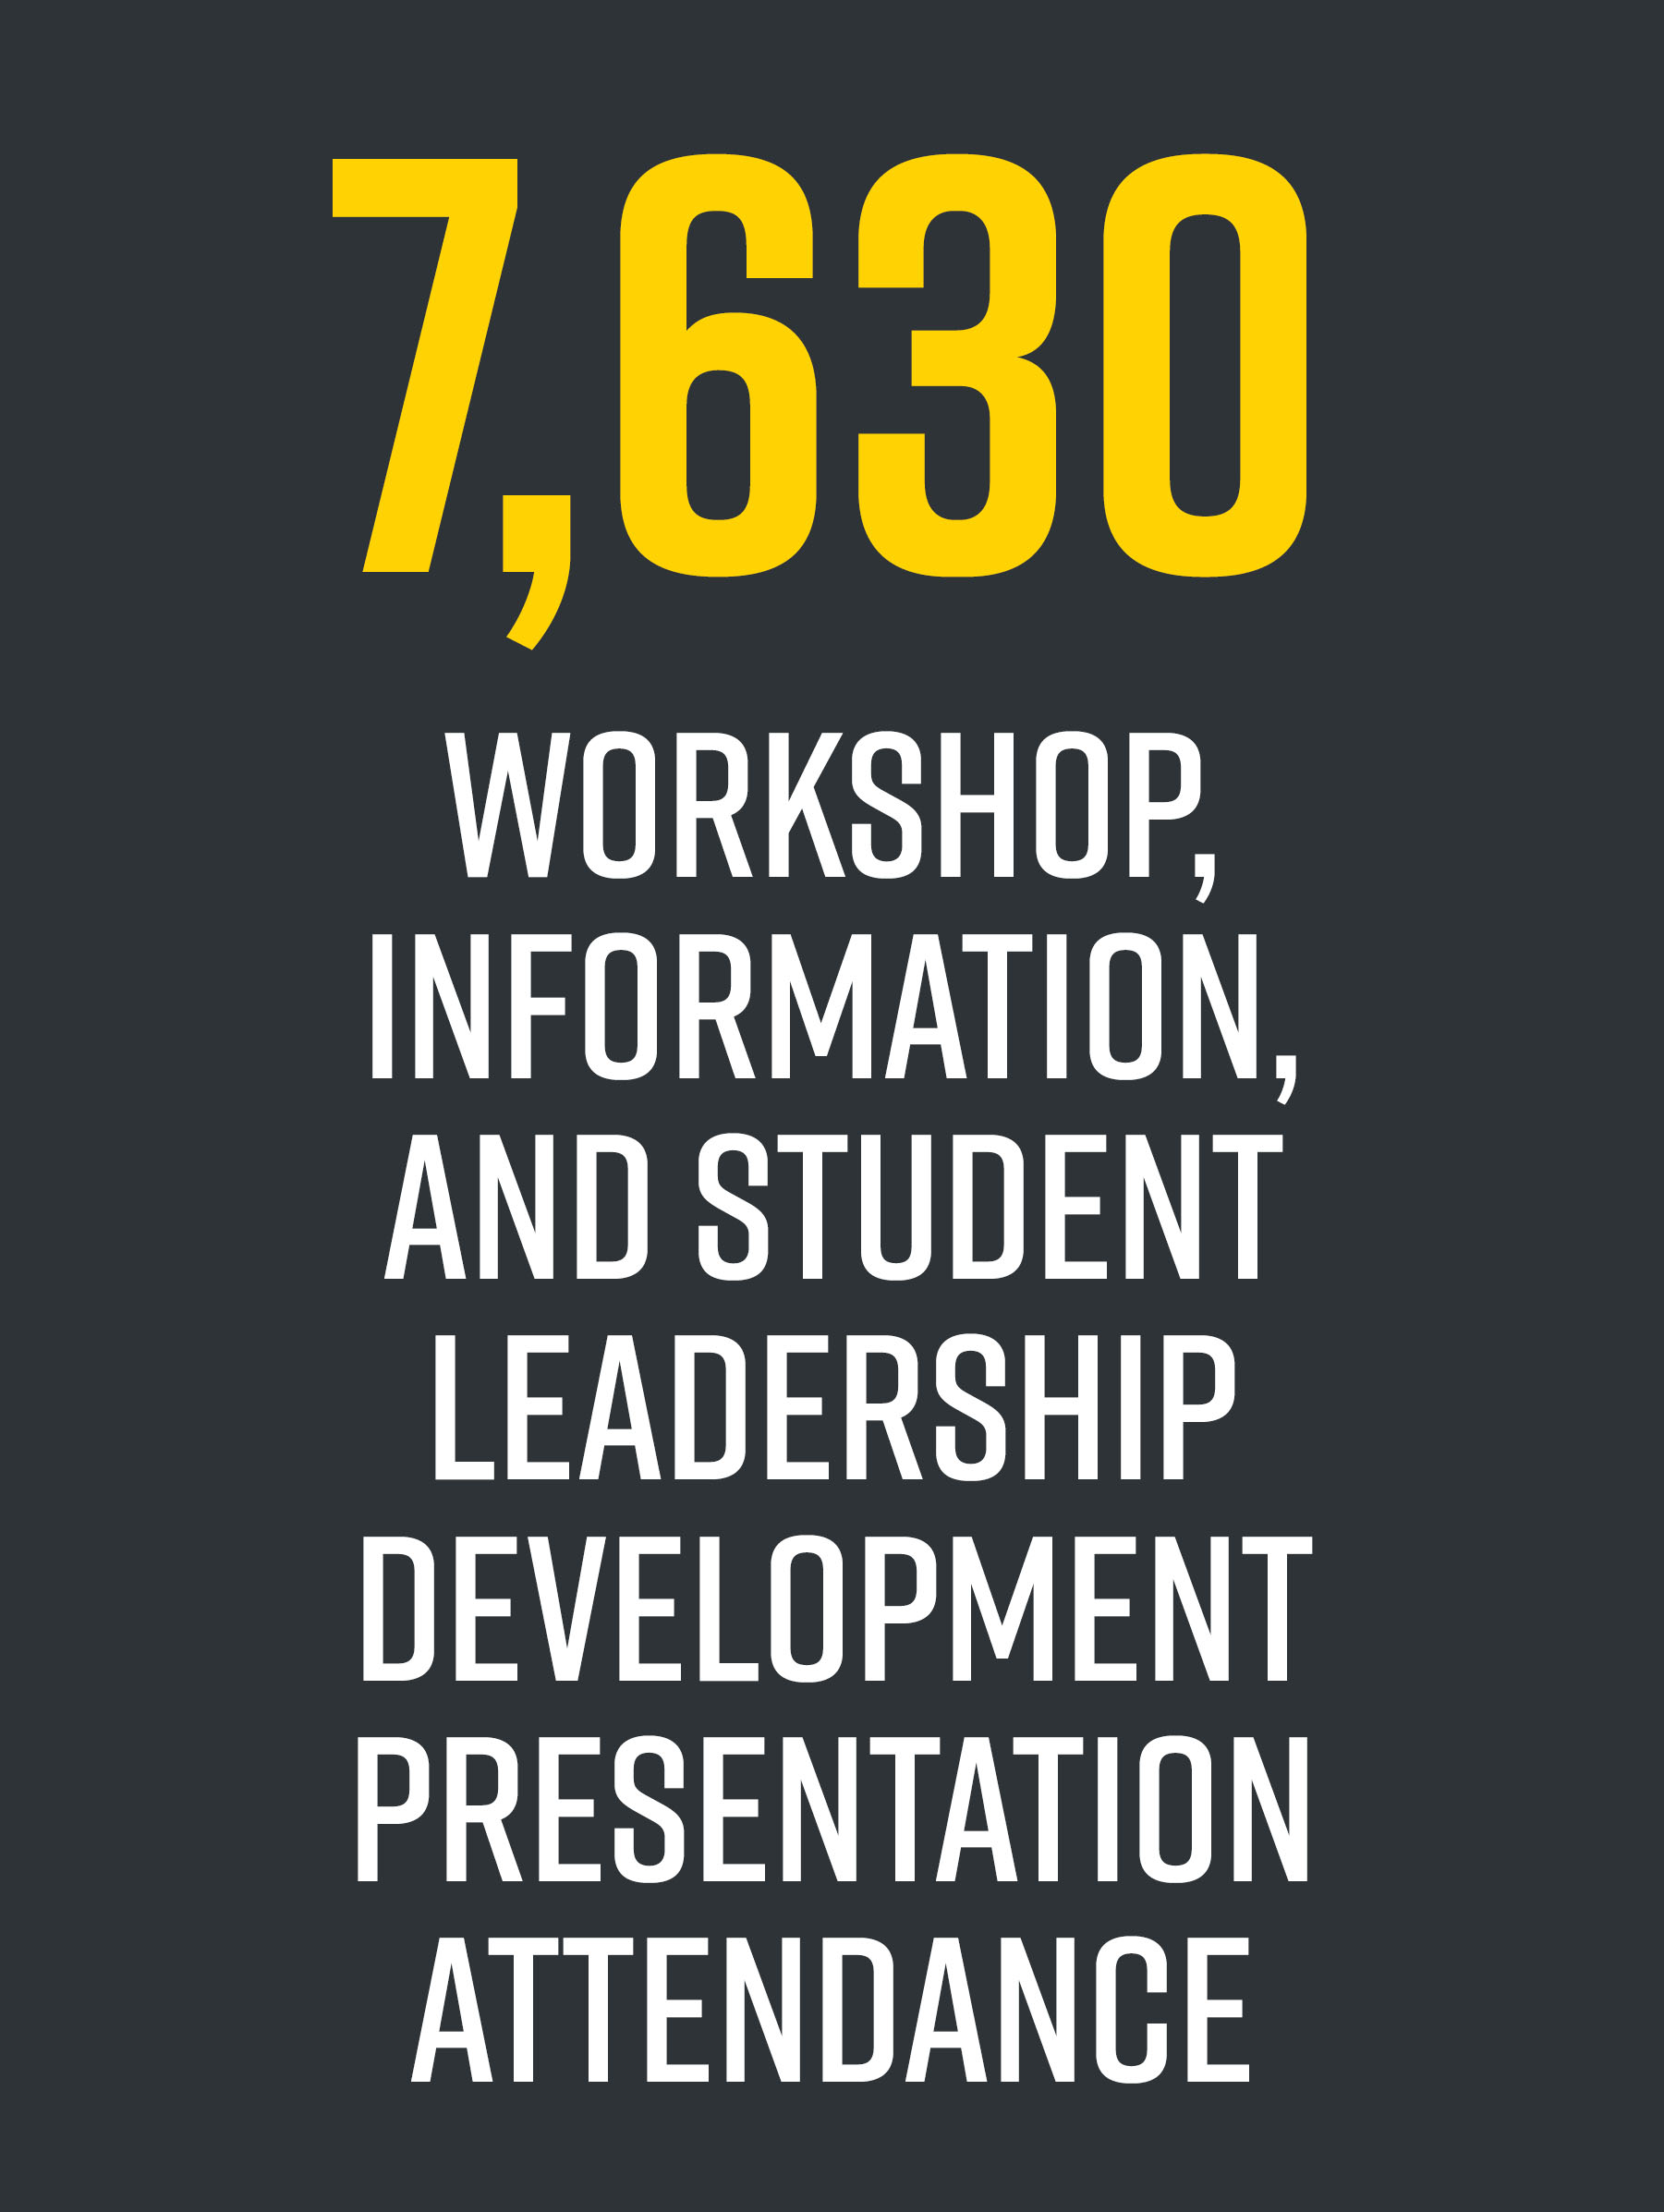 Workshop, Information, and Student Leadership Development Presentation Attendance 20-21